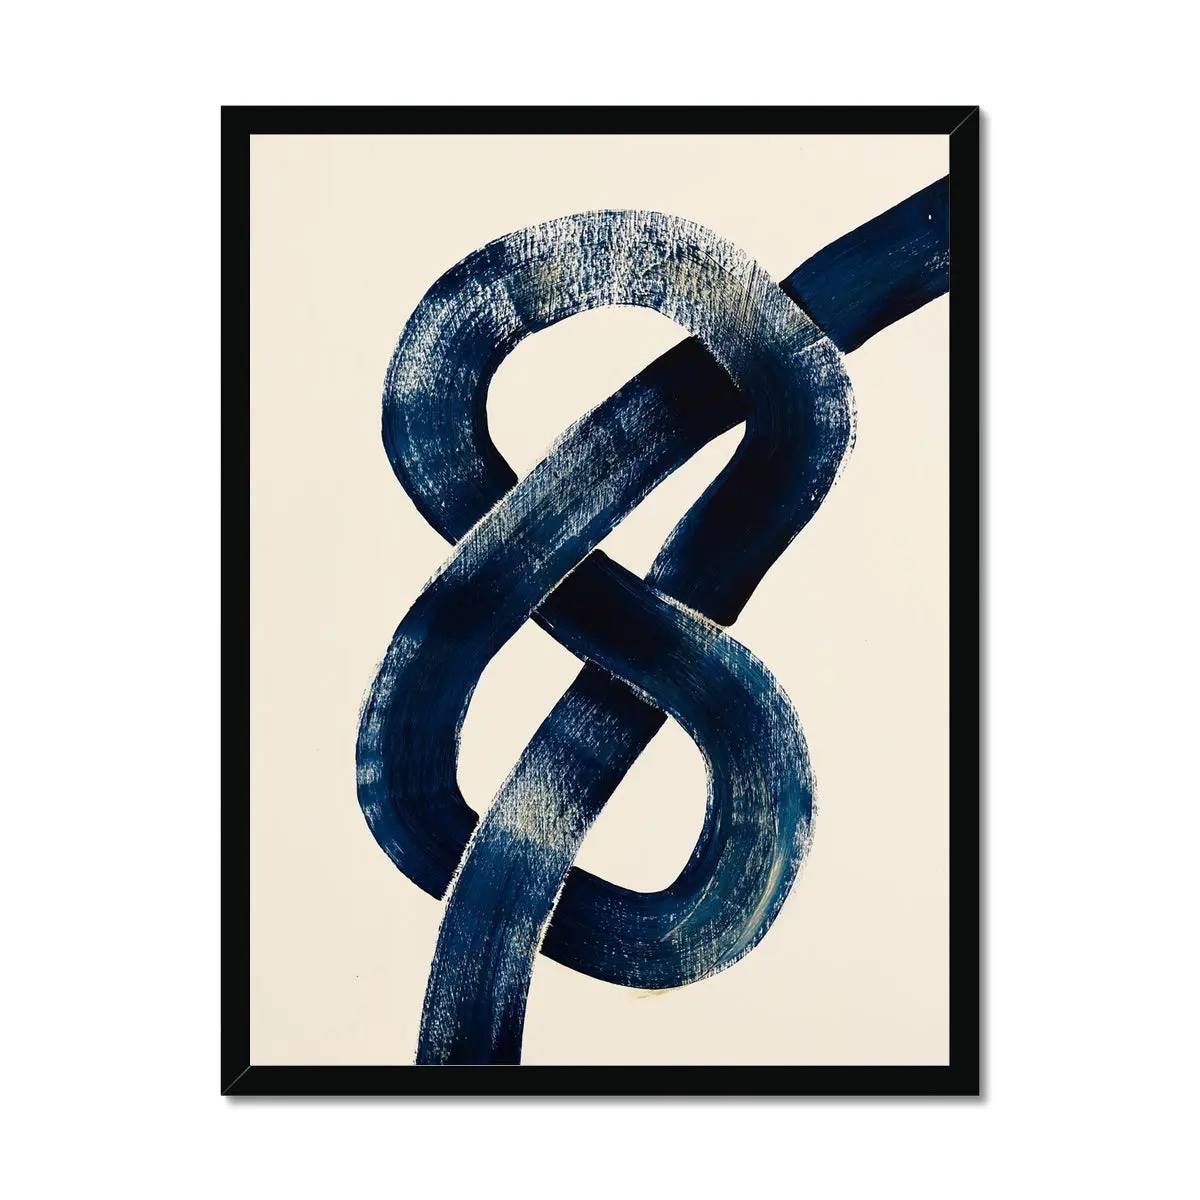 The Figure of Eight Knot is an abstract  blue line artwork  a Beach House Art bestseller